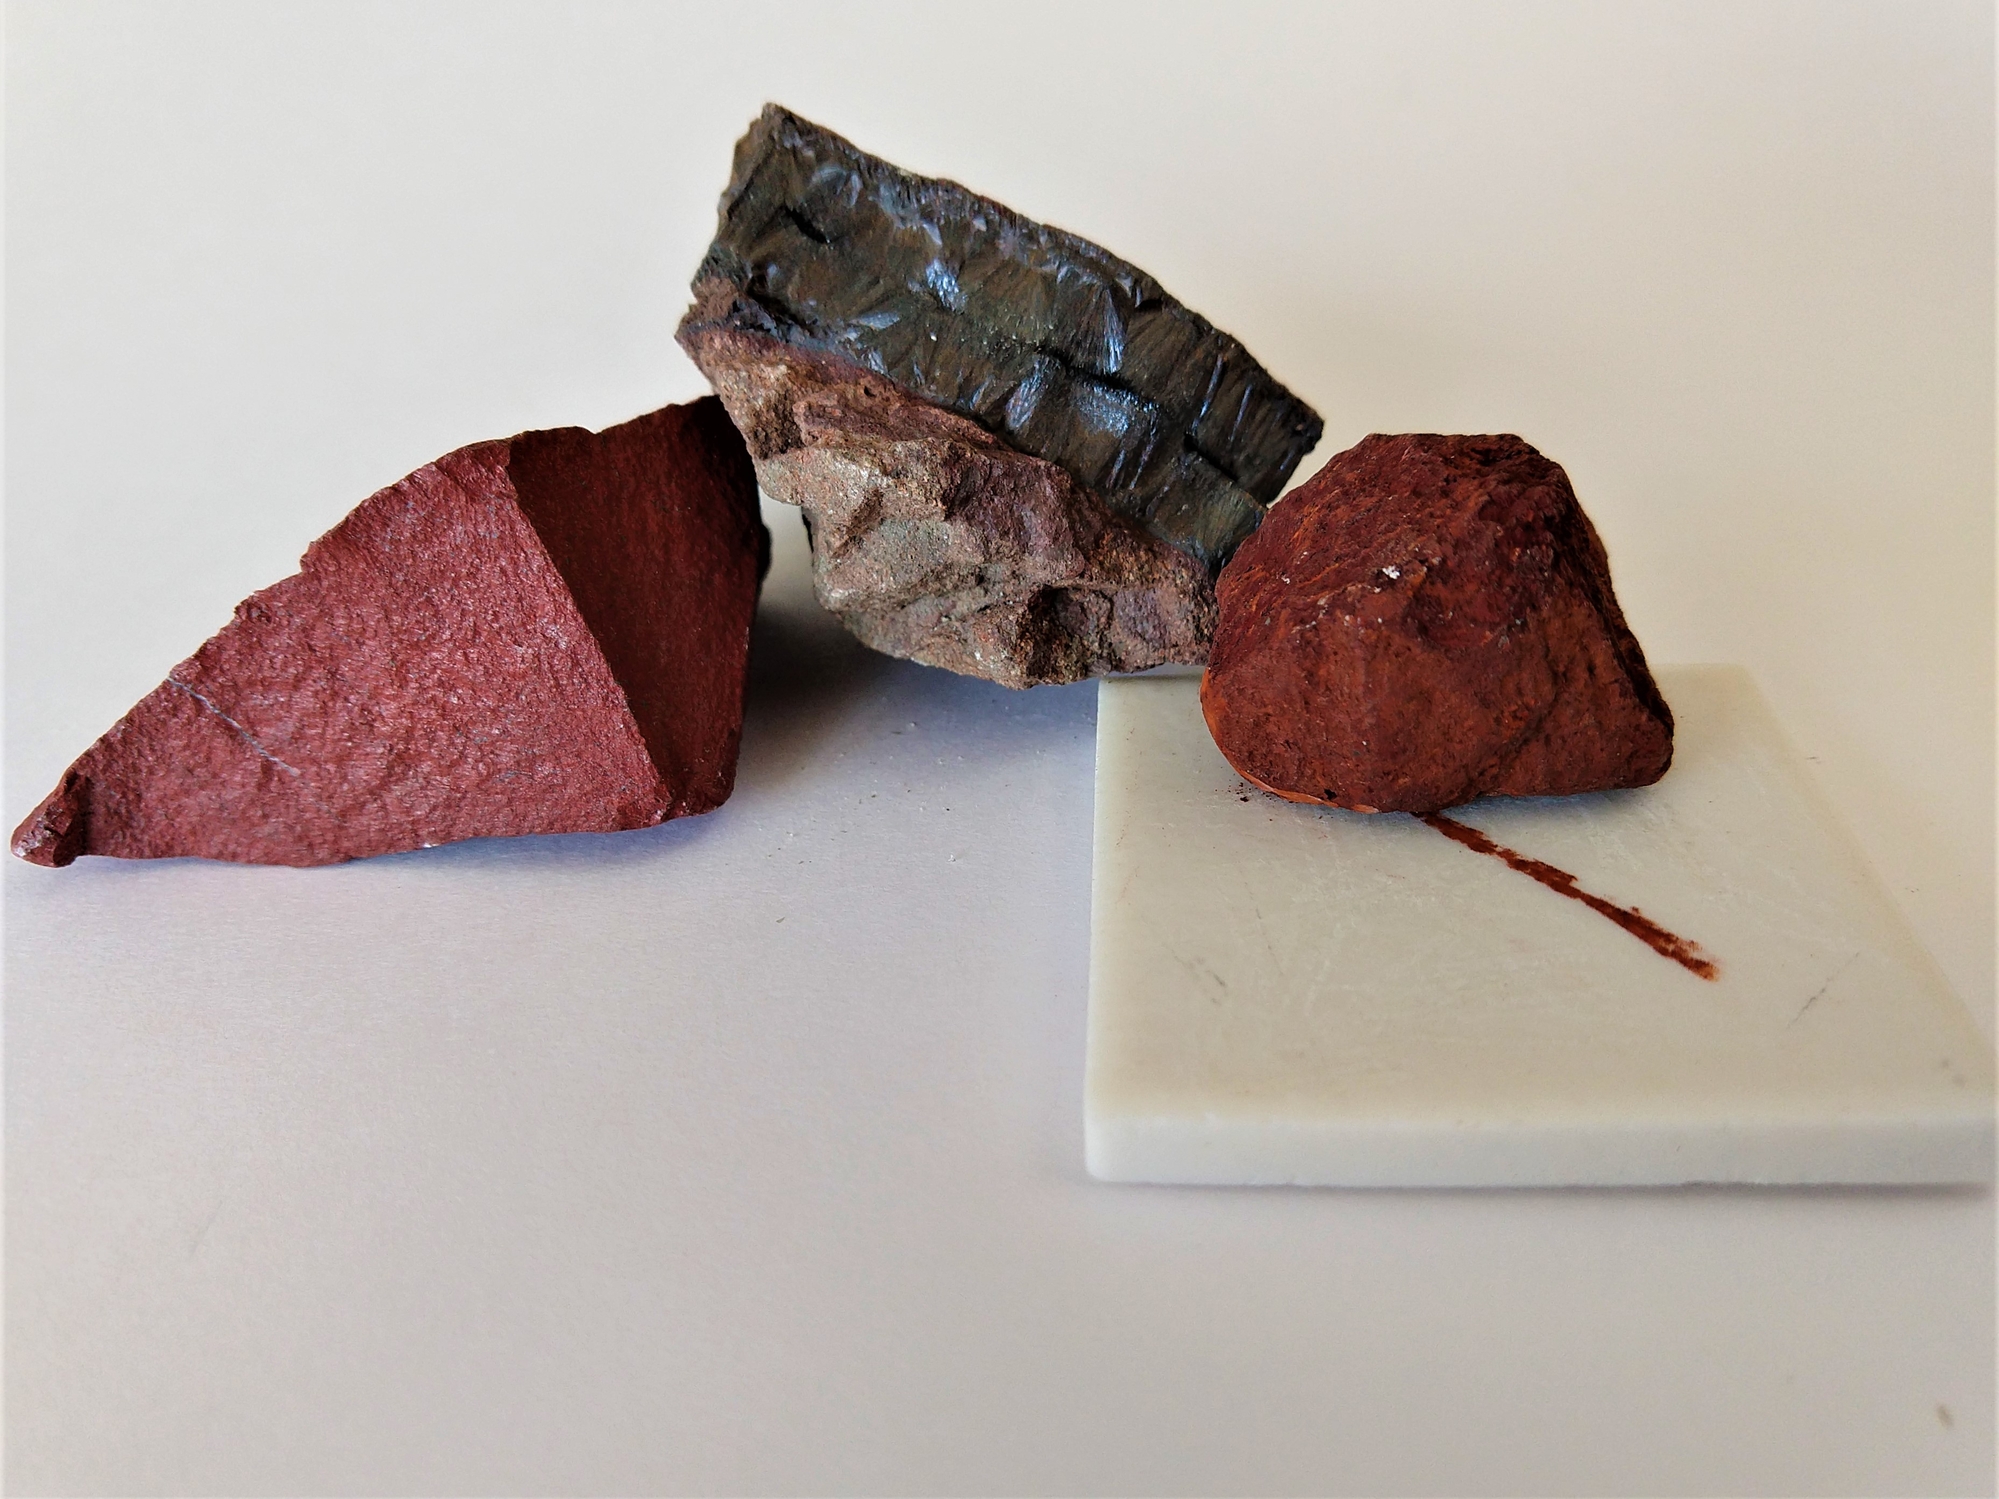 Hematite specimen with a rust-red streak on a ceramic plate